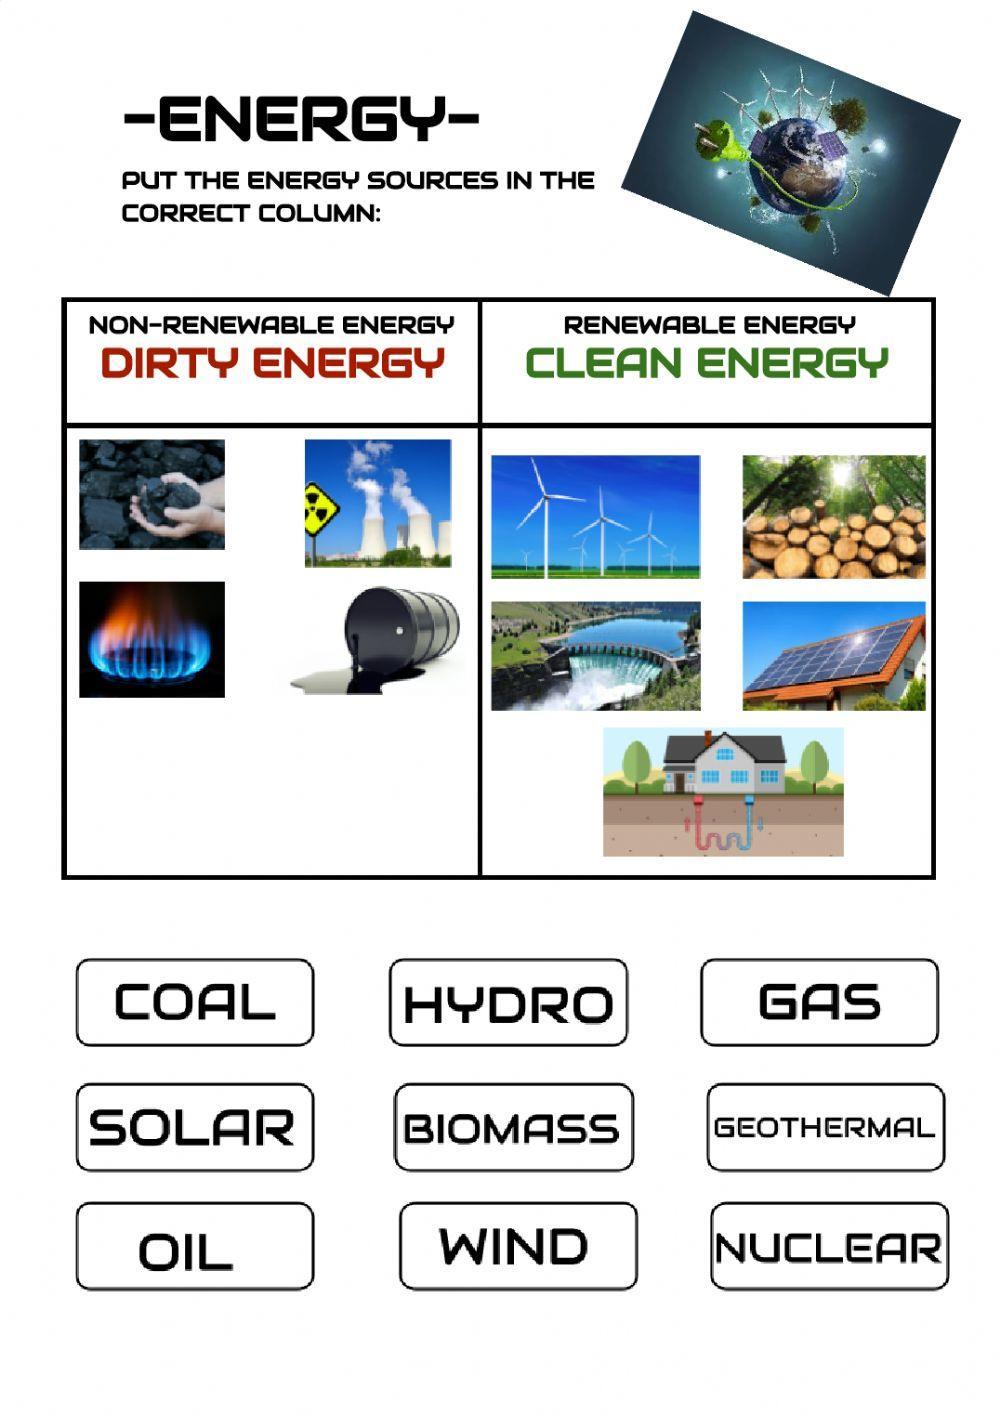 Non-renewable & renewable energy